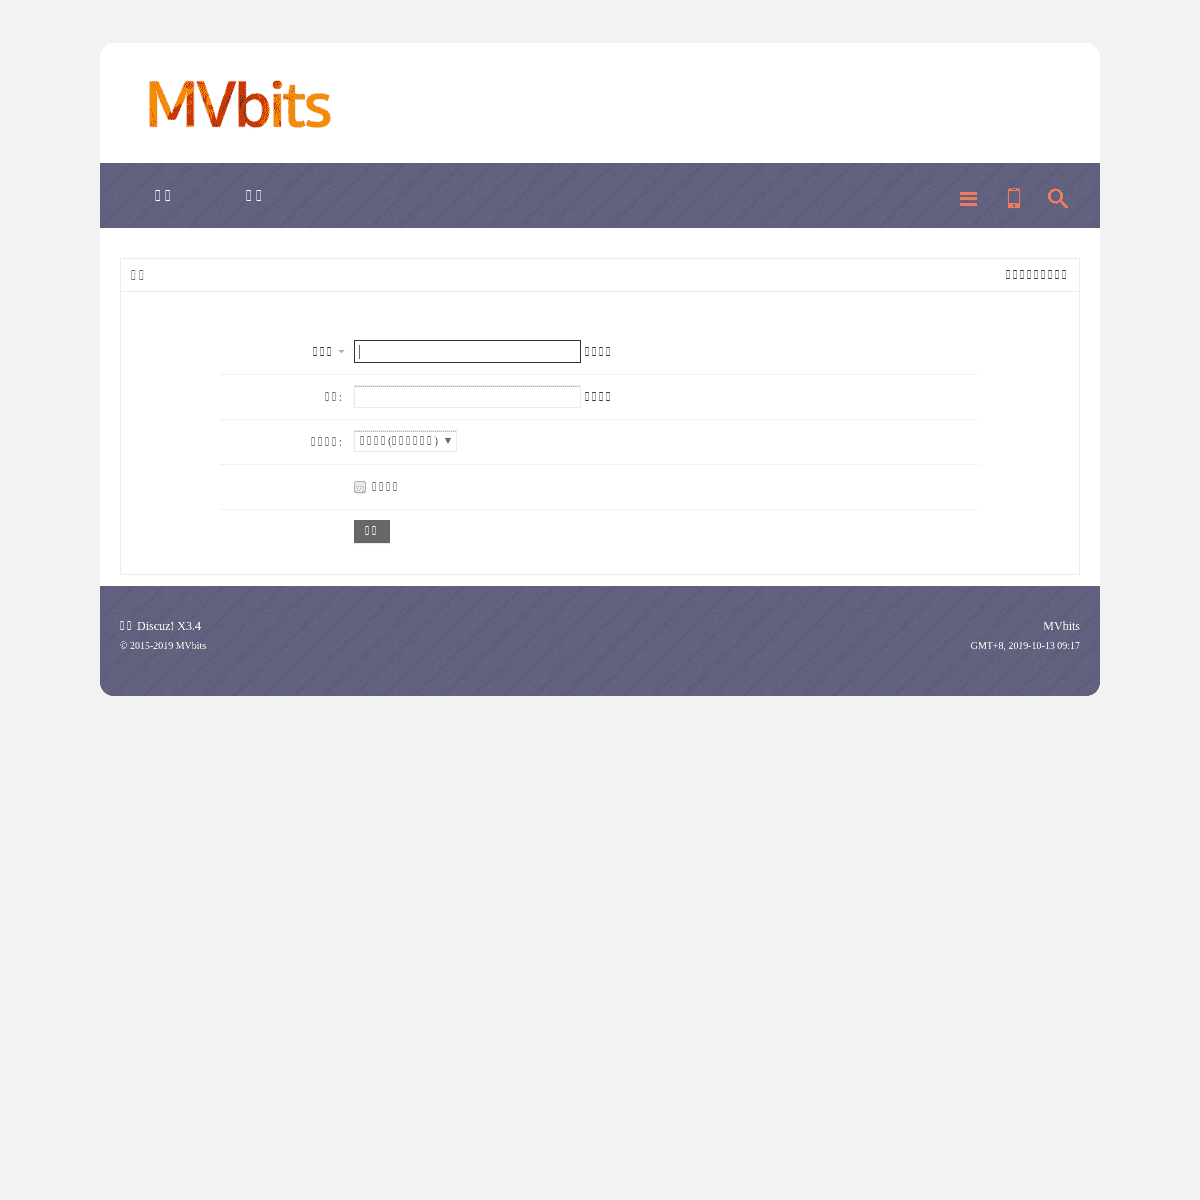 A complete backup of mvbits.com